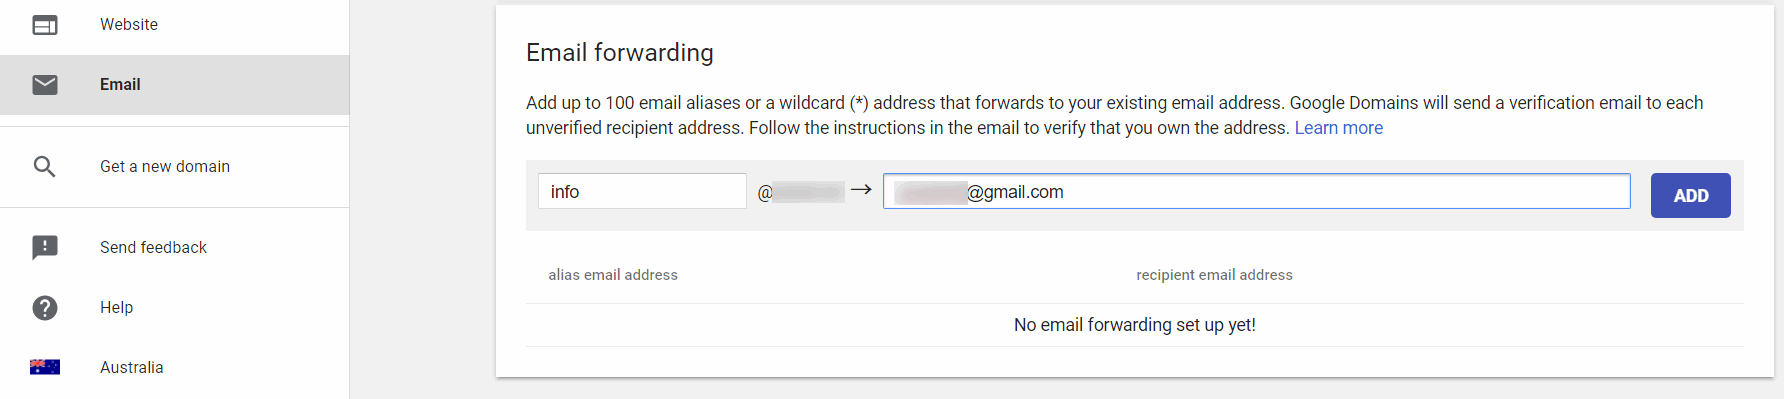 Add new E-Mail forwarding